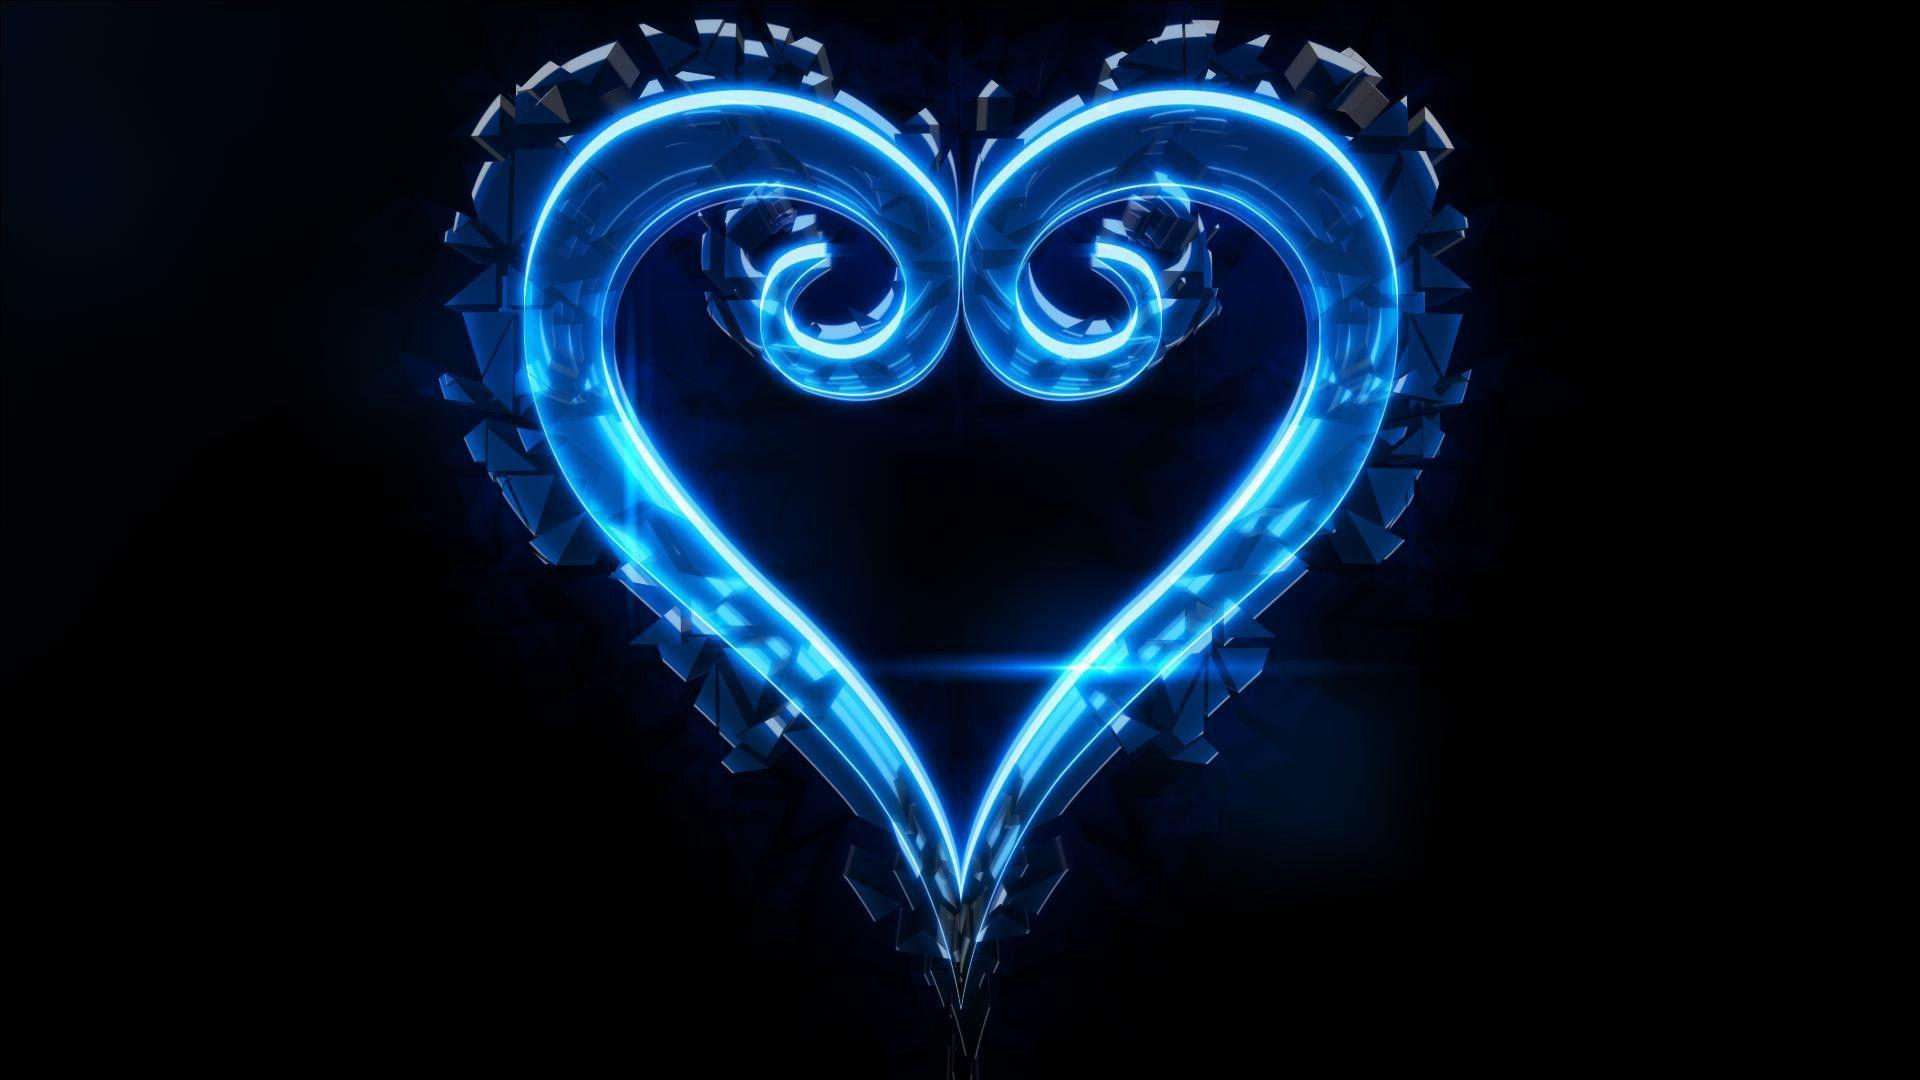 AmazingPict.com. Blue Heart Wallpaper High Resolution